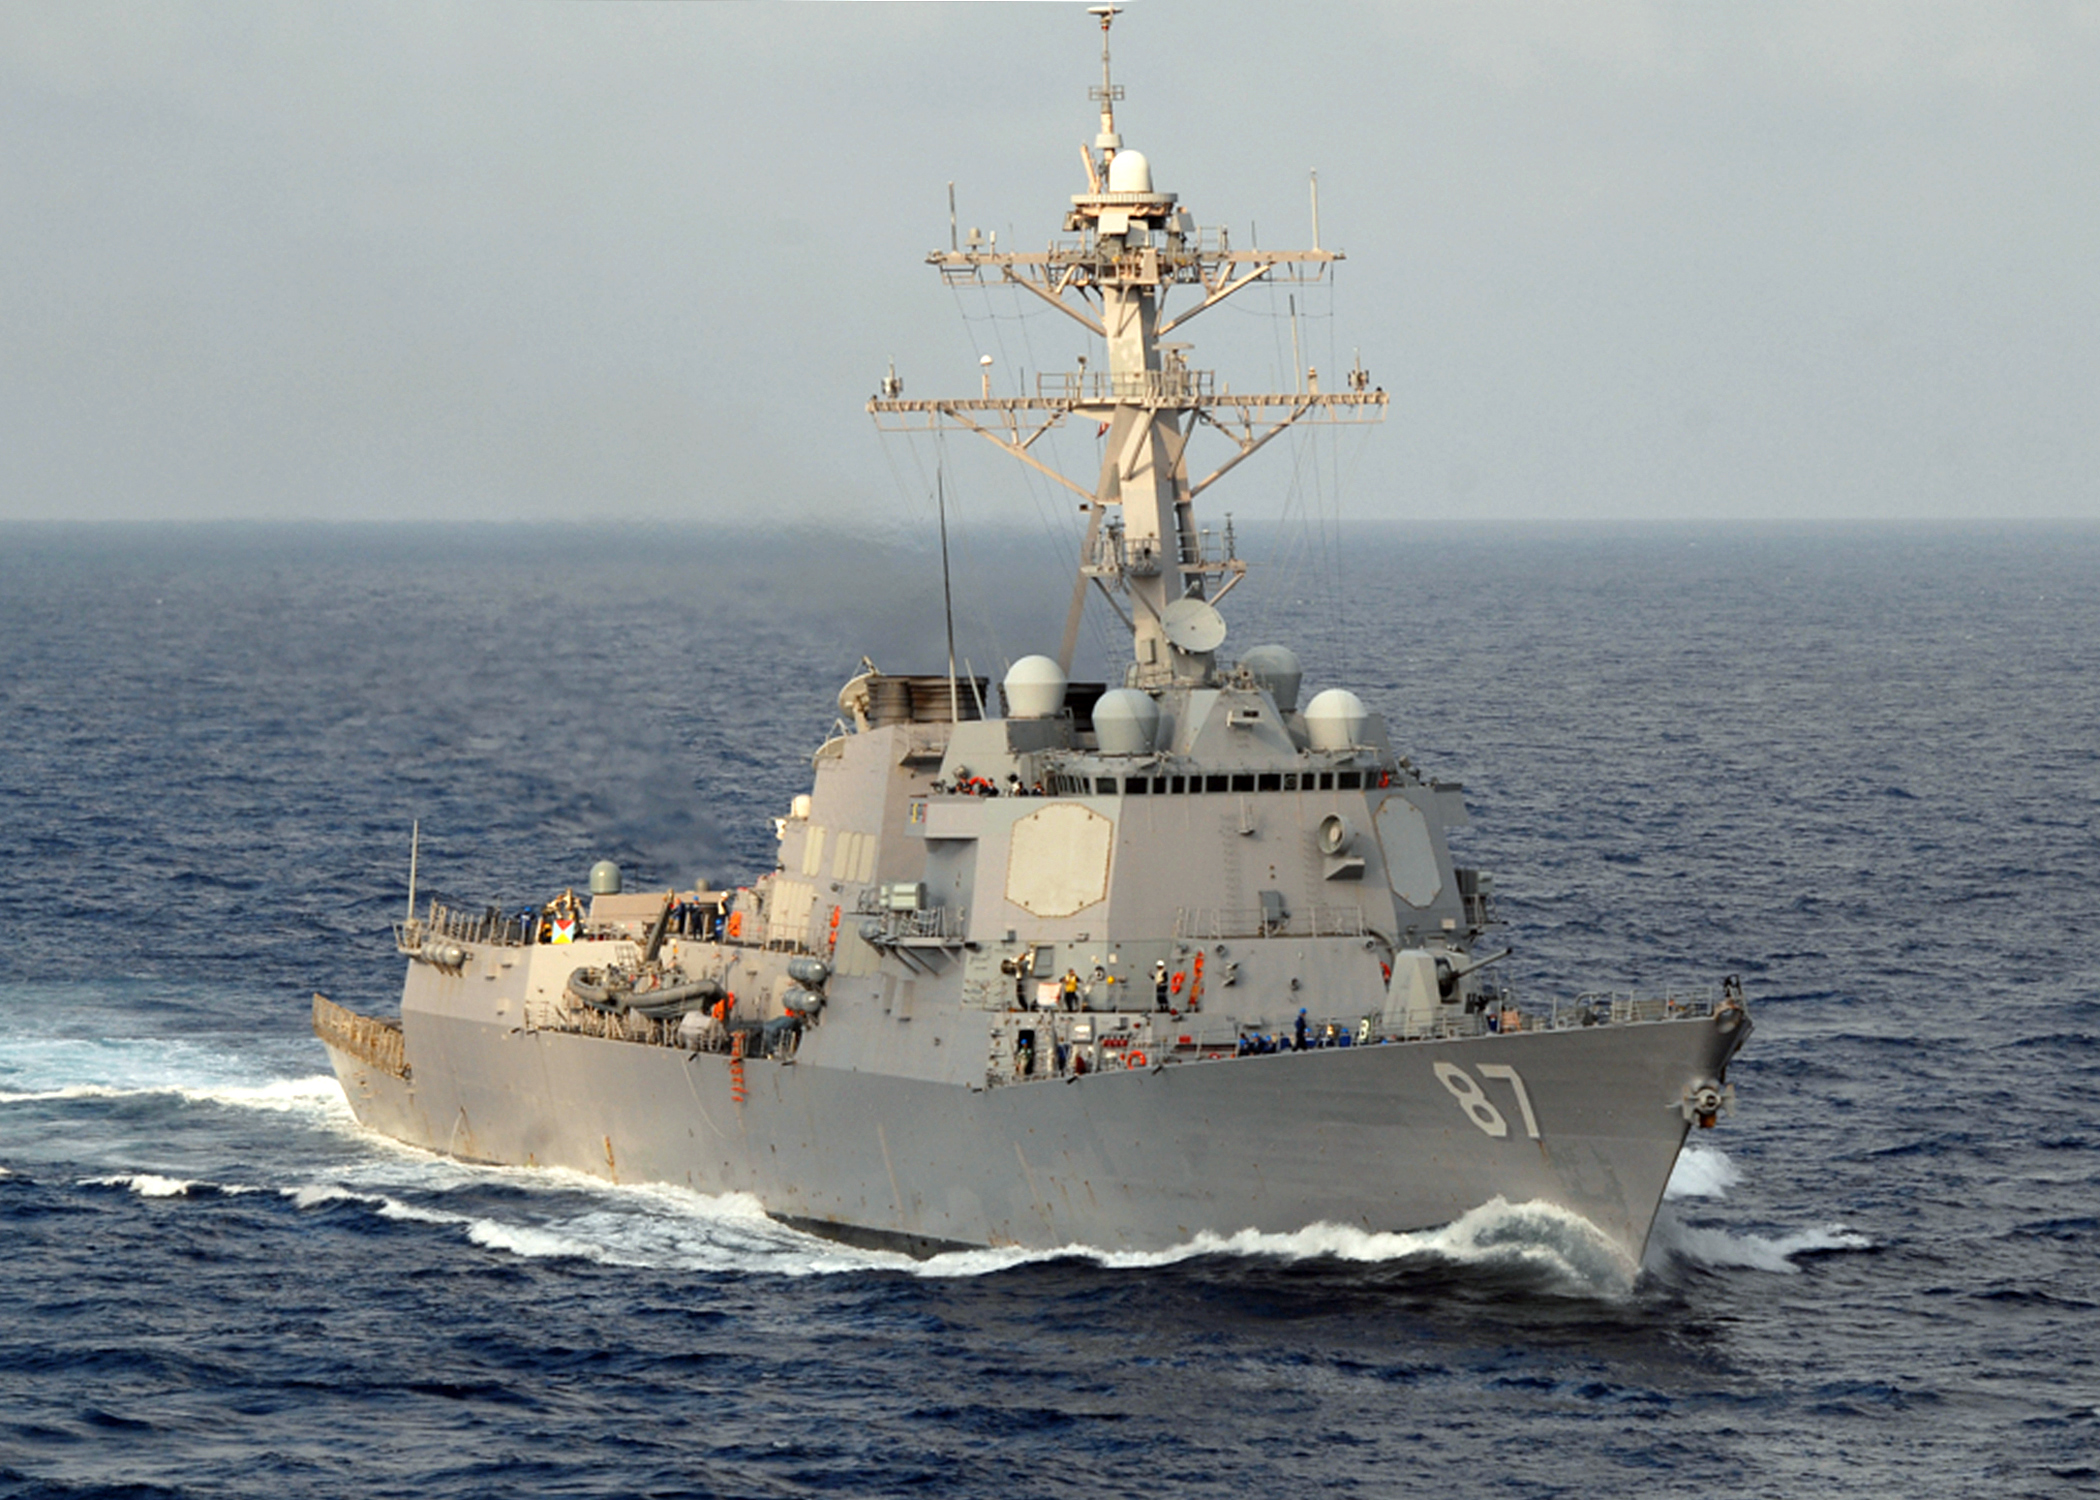 US_Navy_080729-N-3392P-025_The_guided-missile_destroyer_USS_Mason_(DDG_87)_steams_through_the_Atlantic_Ocean.jpg